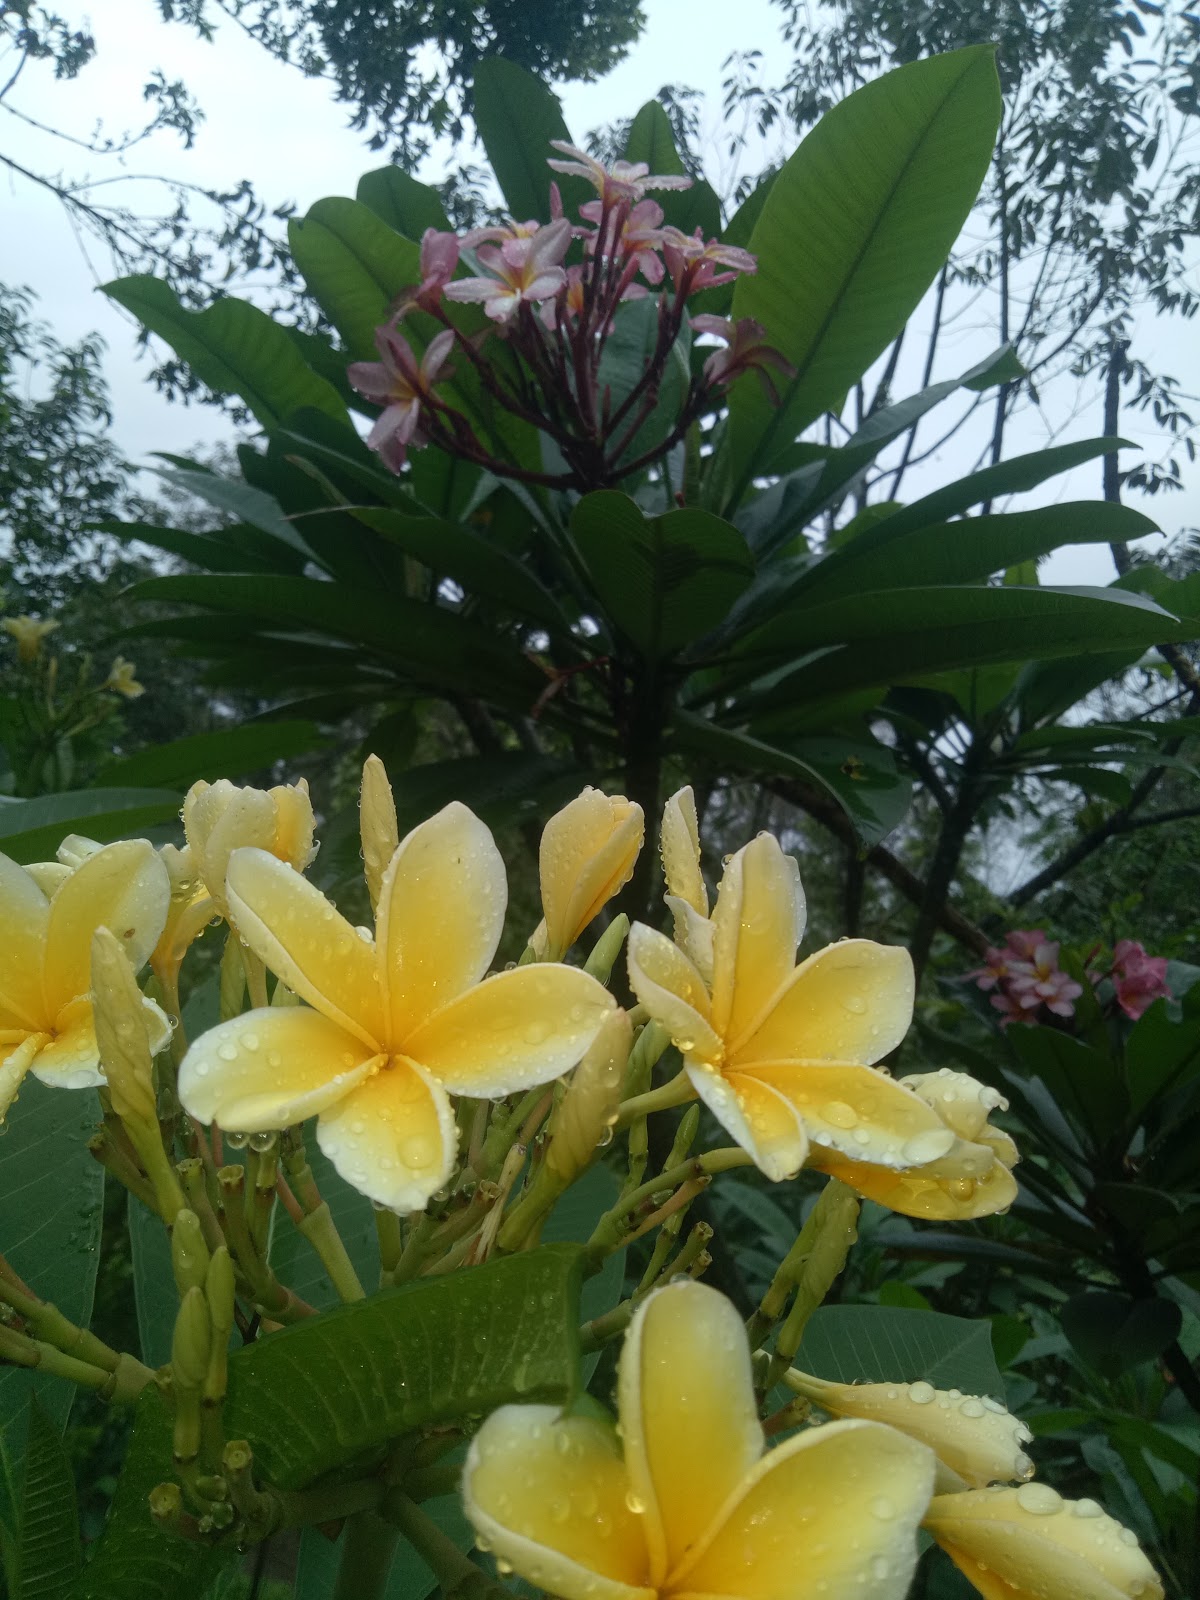 Harga Tanaman Kamboja Bali Bunga Warna Kuning Tinggi 1 Sampai 1 5 Meter Rp 50 000 Sinox Nursery